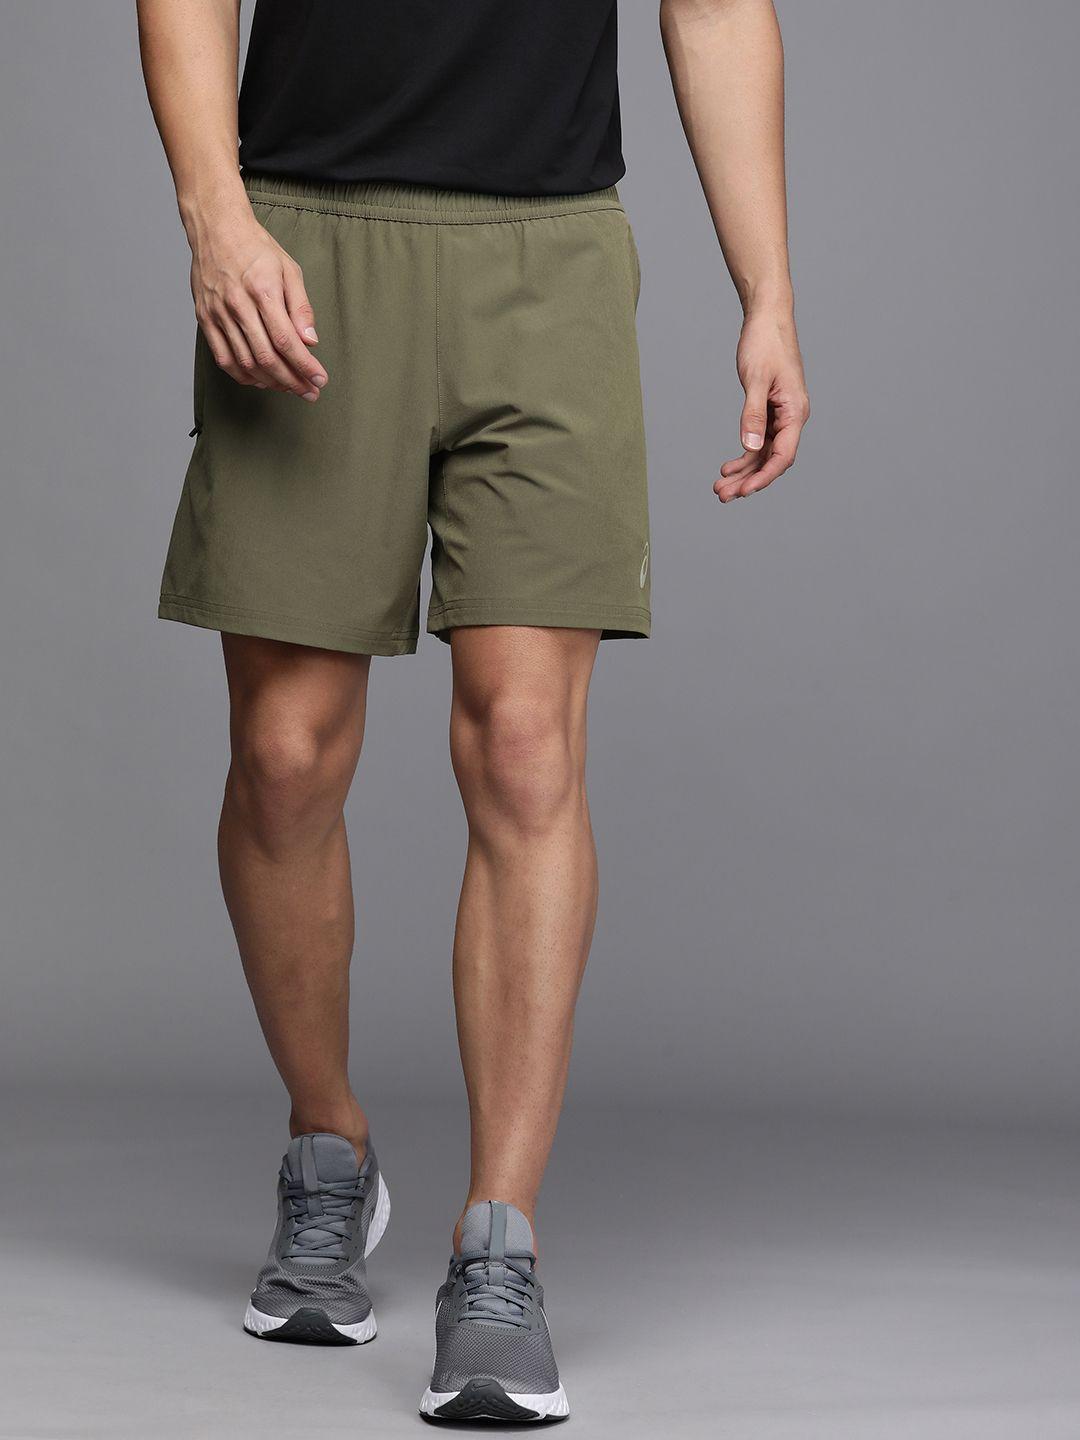 asics men olive green solid mid rise above knee inner woven running shorts